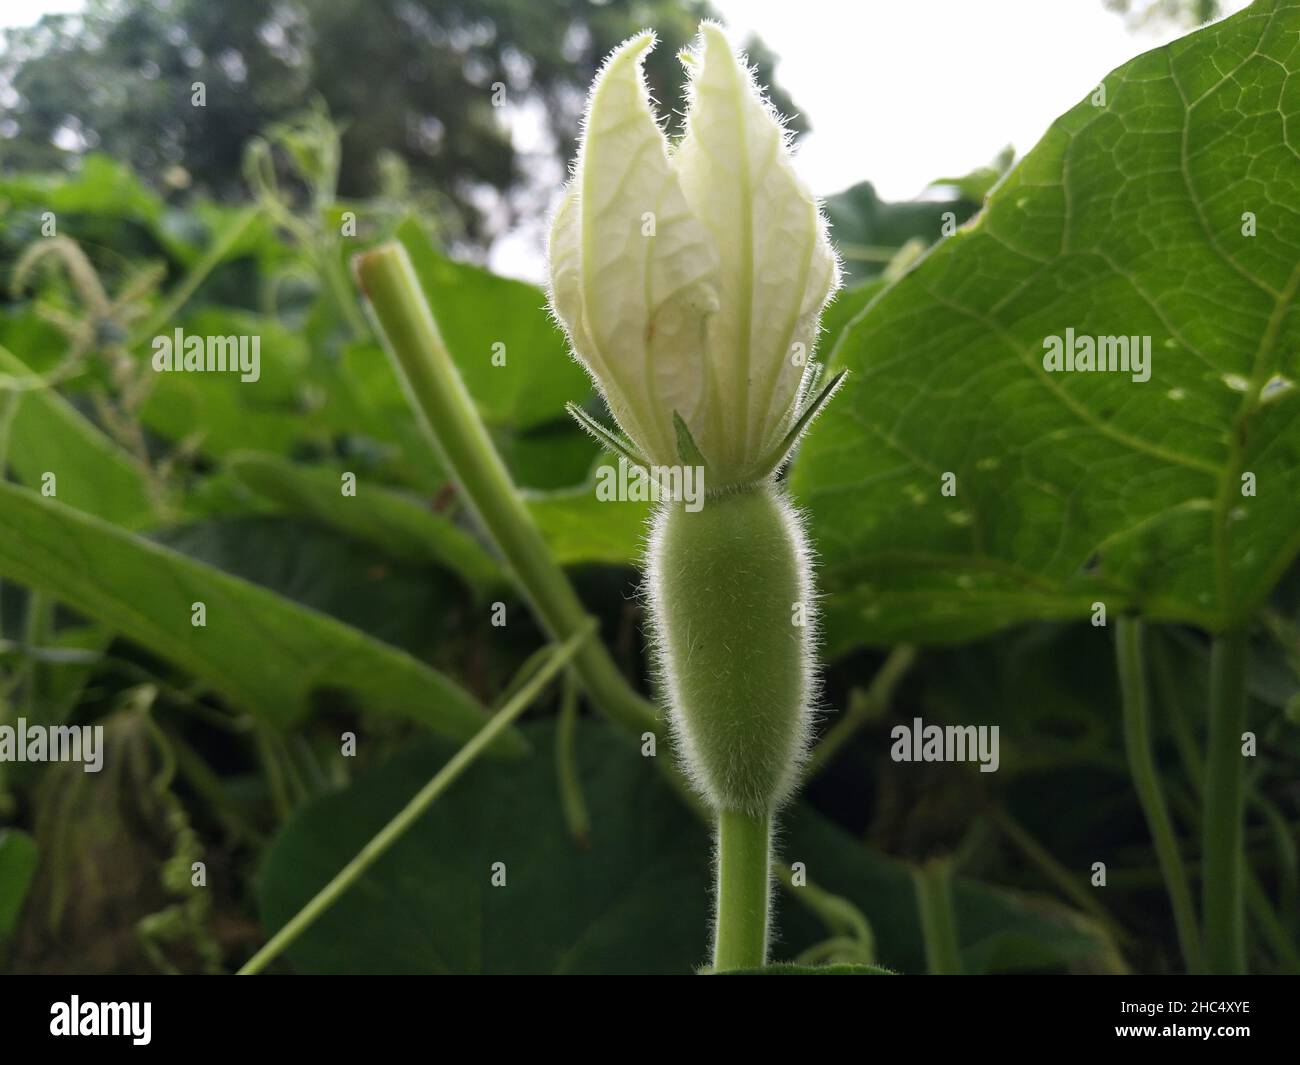 Calabash or bottle gourd (Lagenaria siceraria) crop. Concept of flower to fruit development. Stock Photo